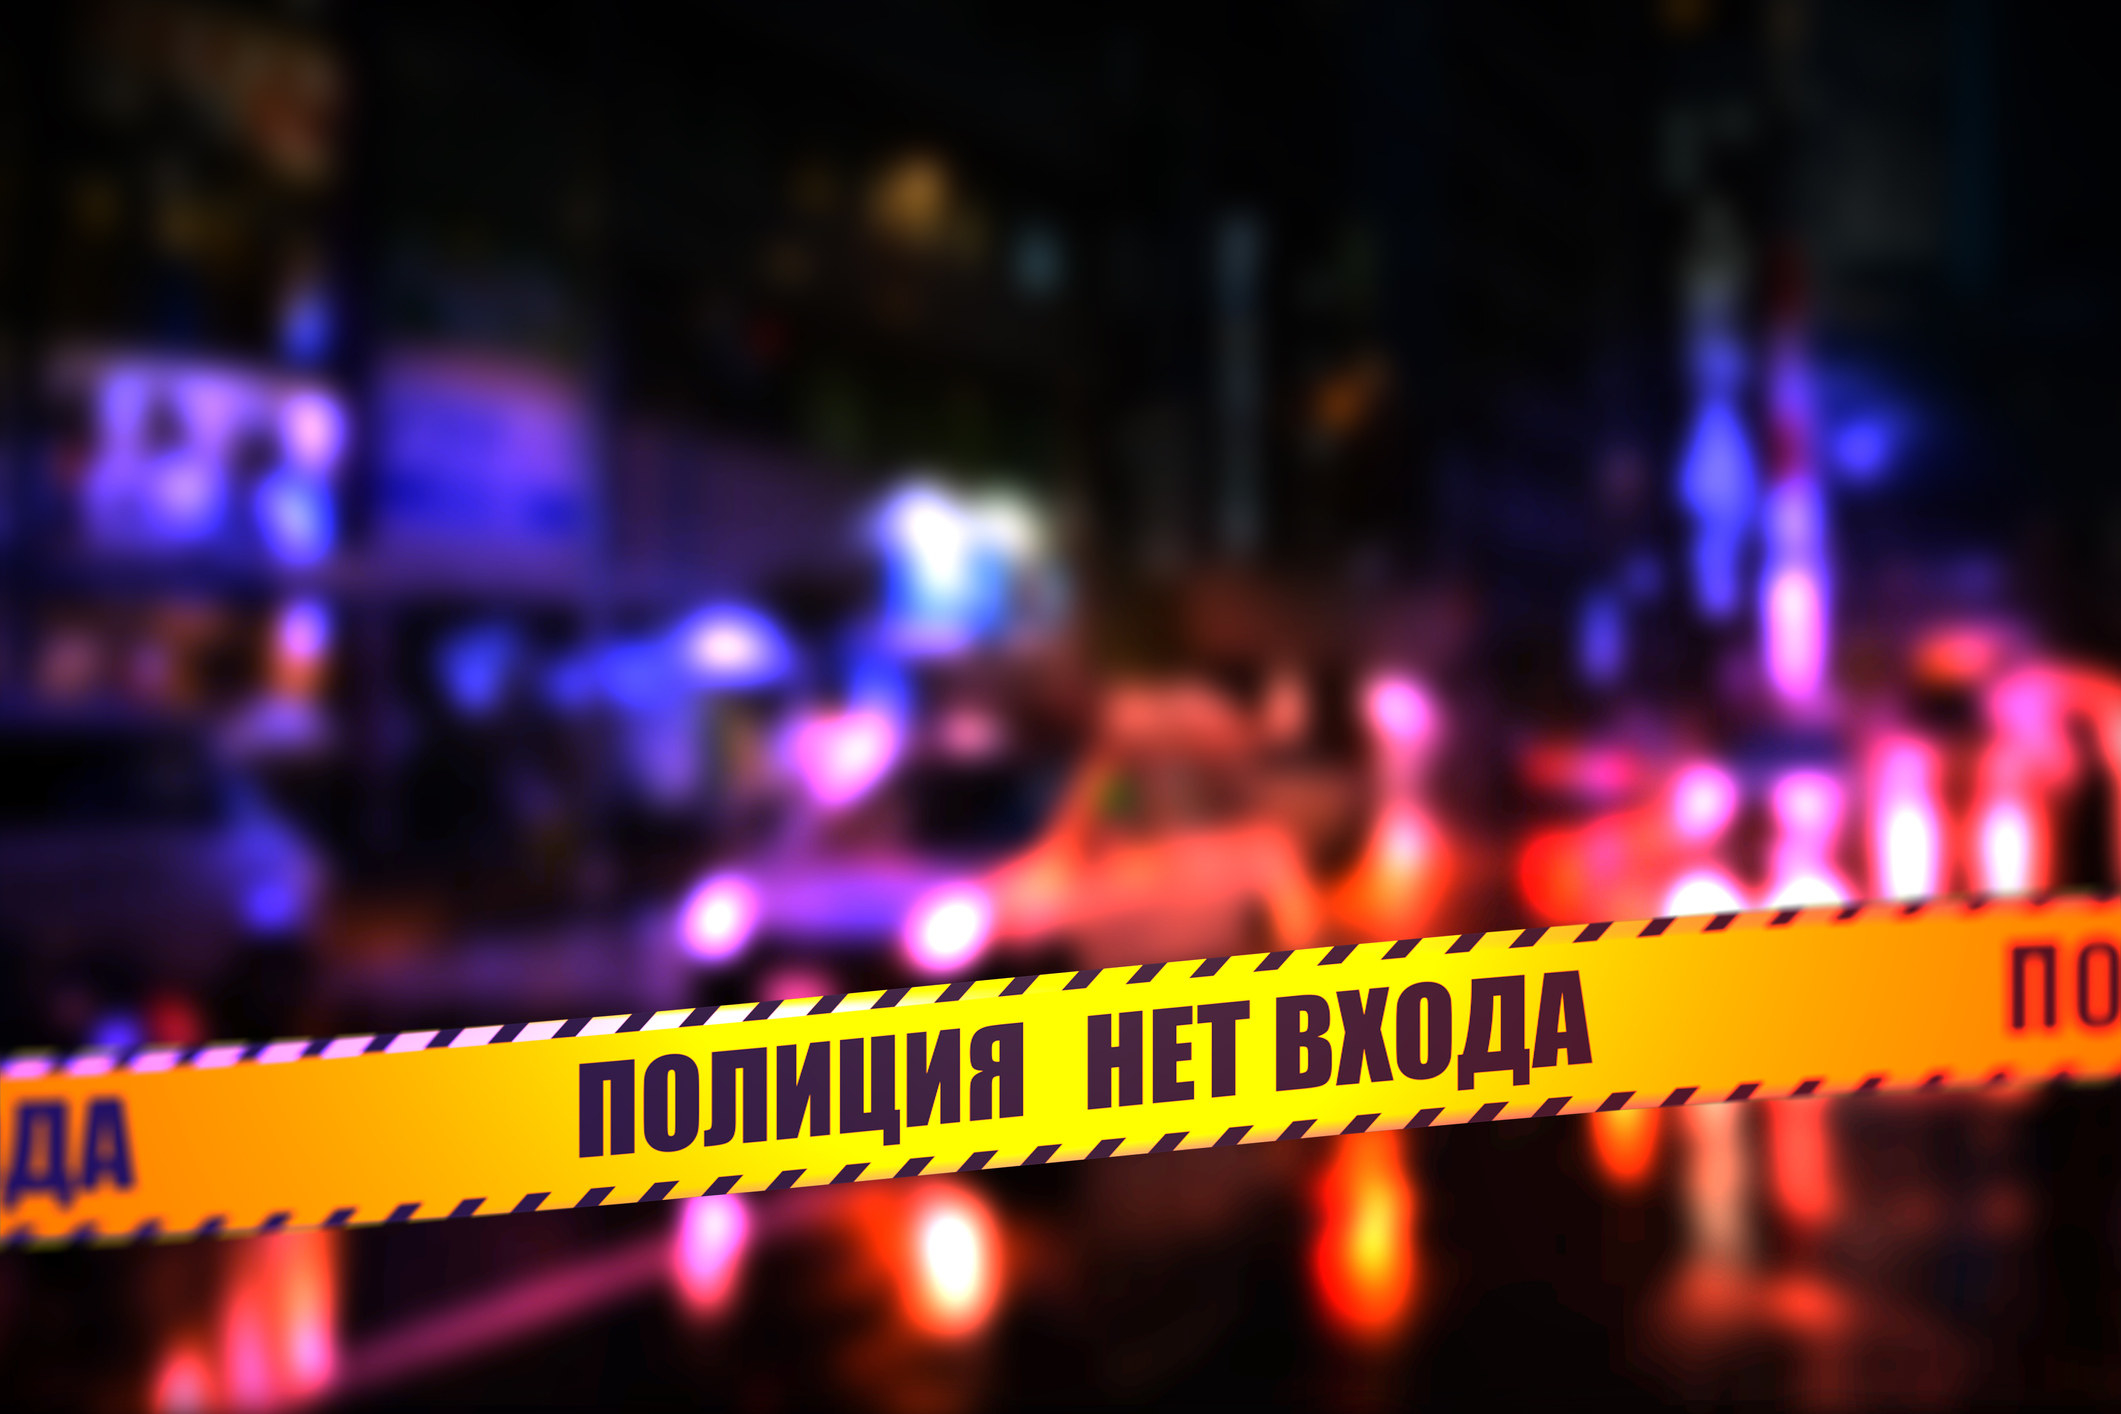 police tape at a crime scene in russia